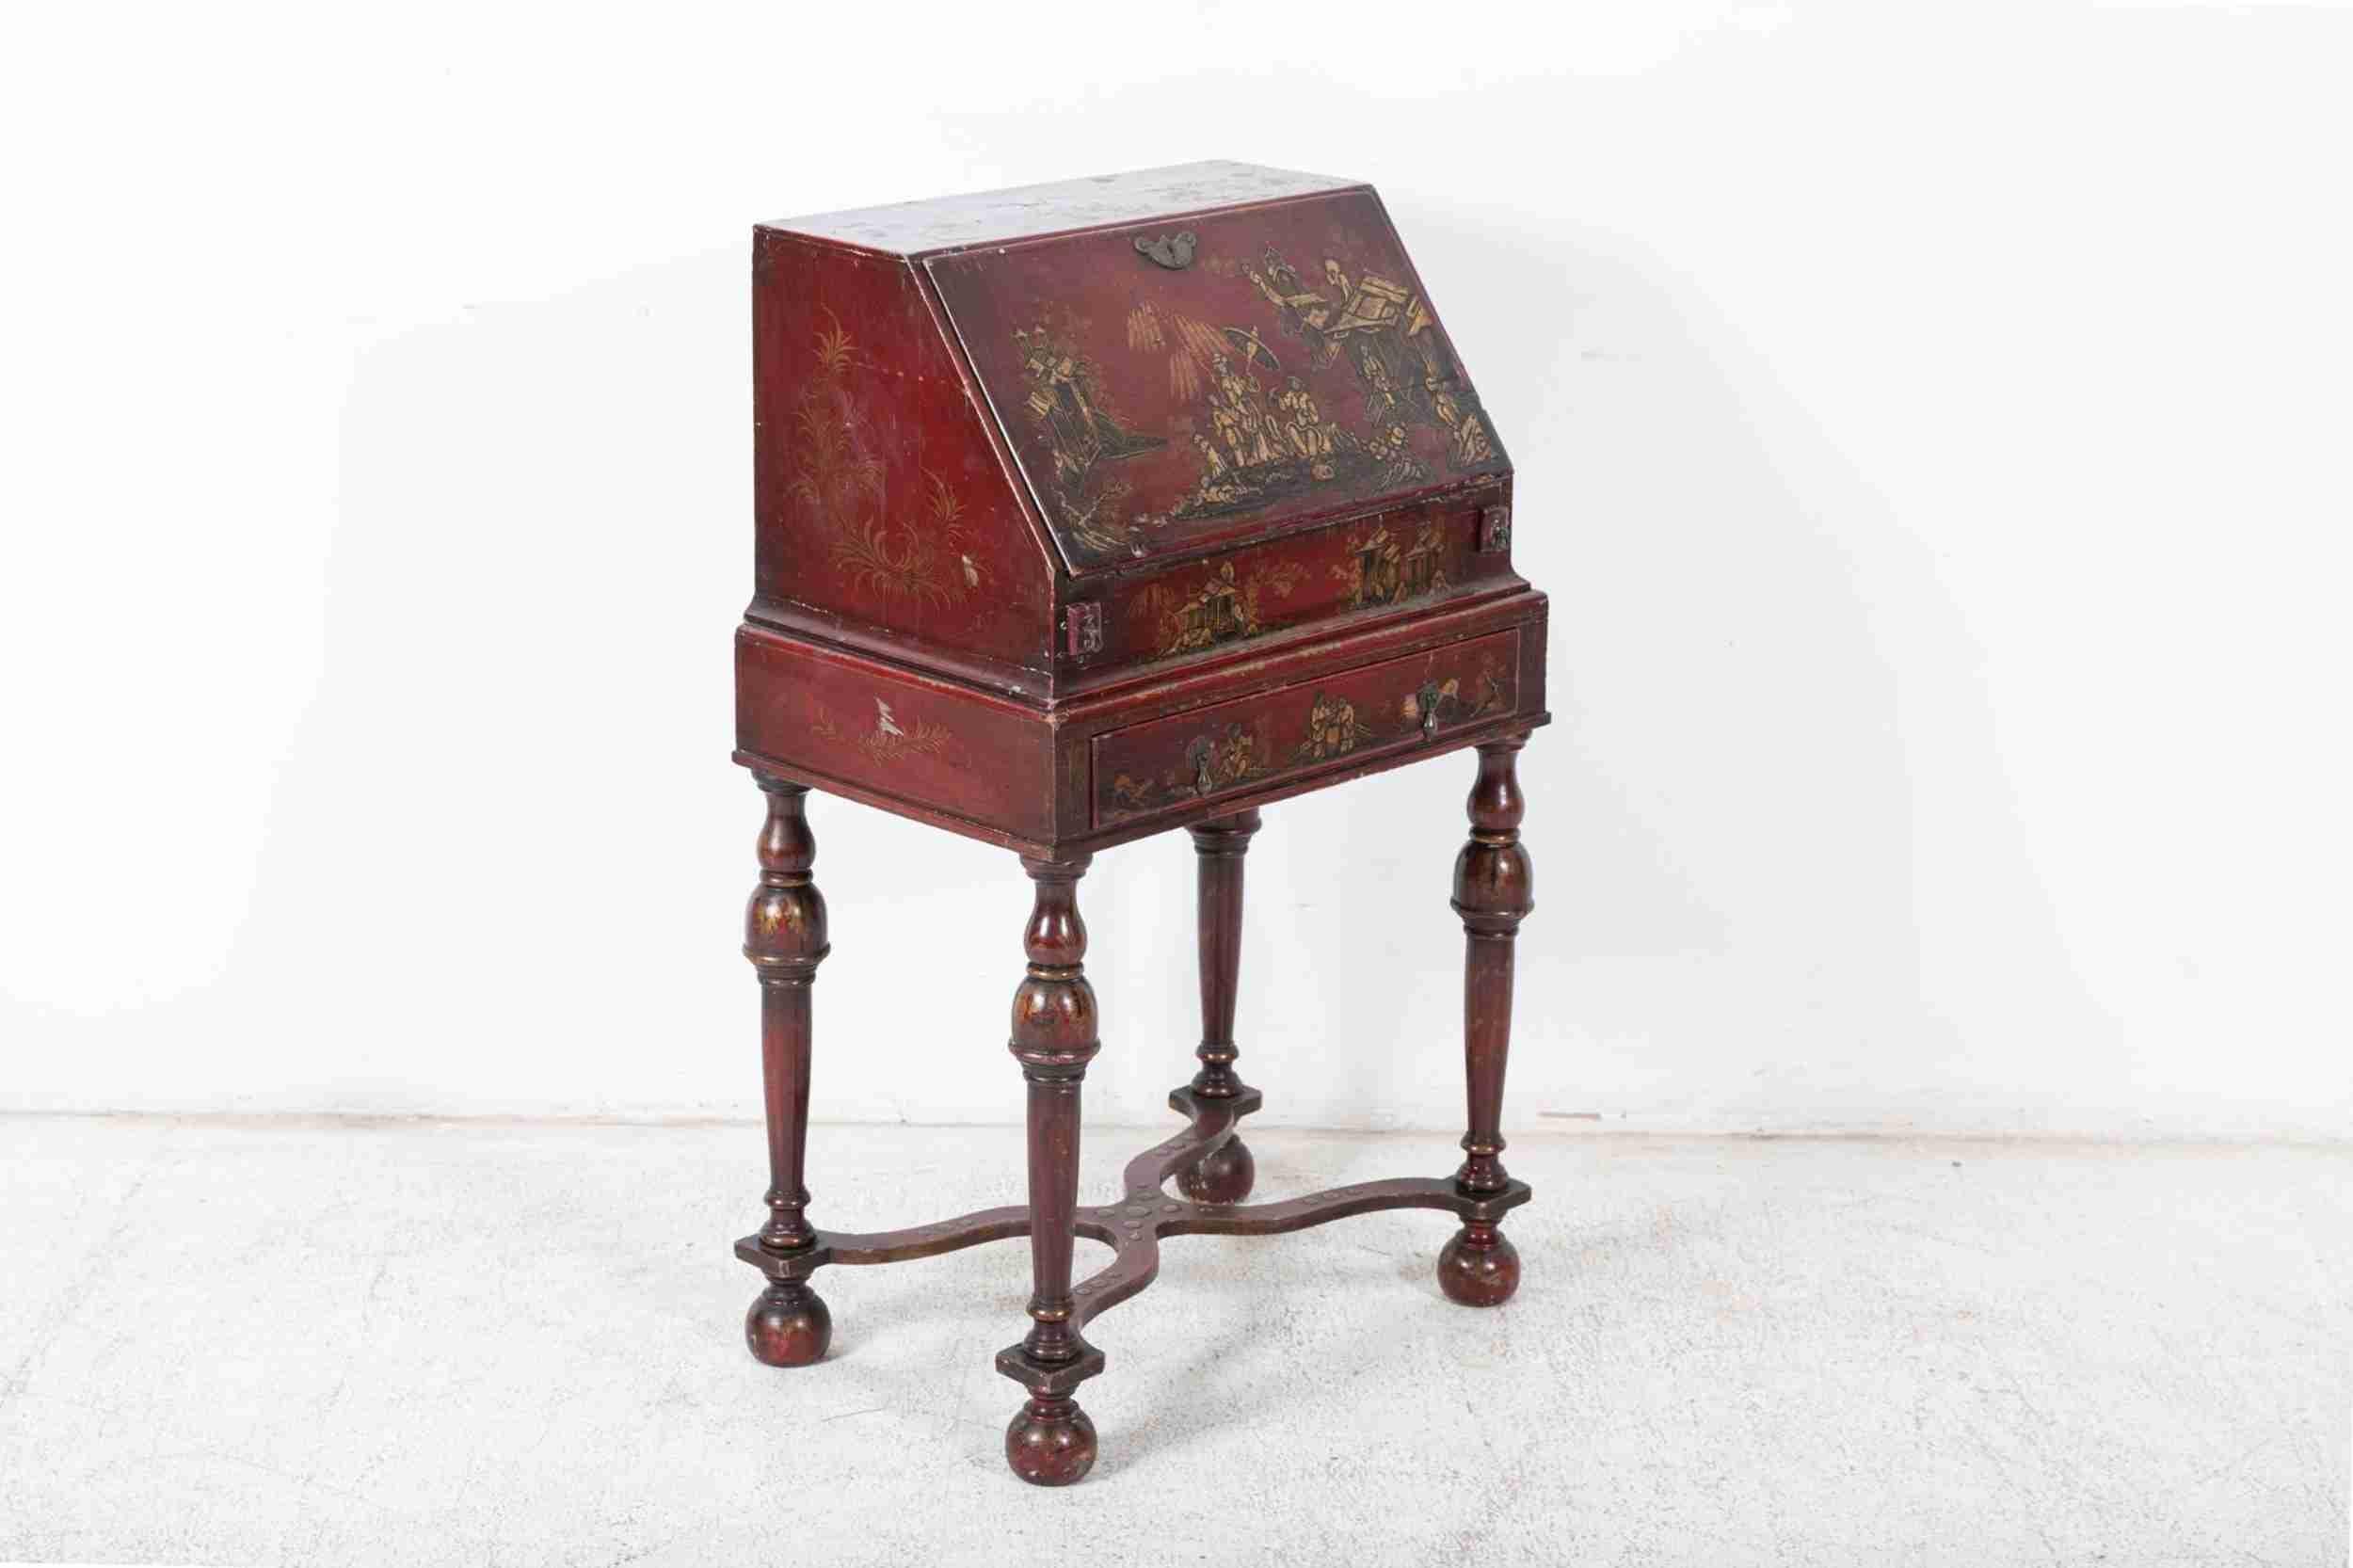 Circa 1900

English decorative chinoiserie bureau writing desk - Bonheur Du Jour. Great colour and patina with chinoiserie decoration.

sku 1006

Measures: W59 x D39 x H98 cm.